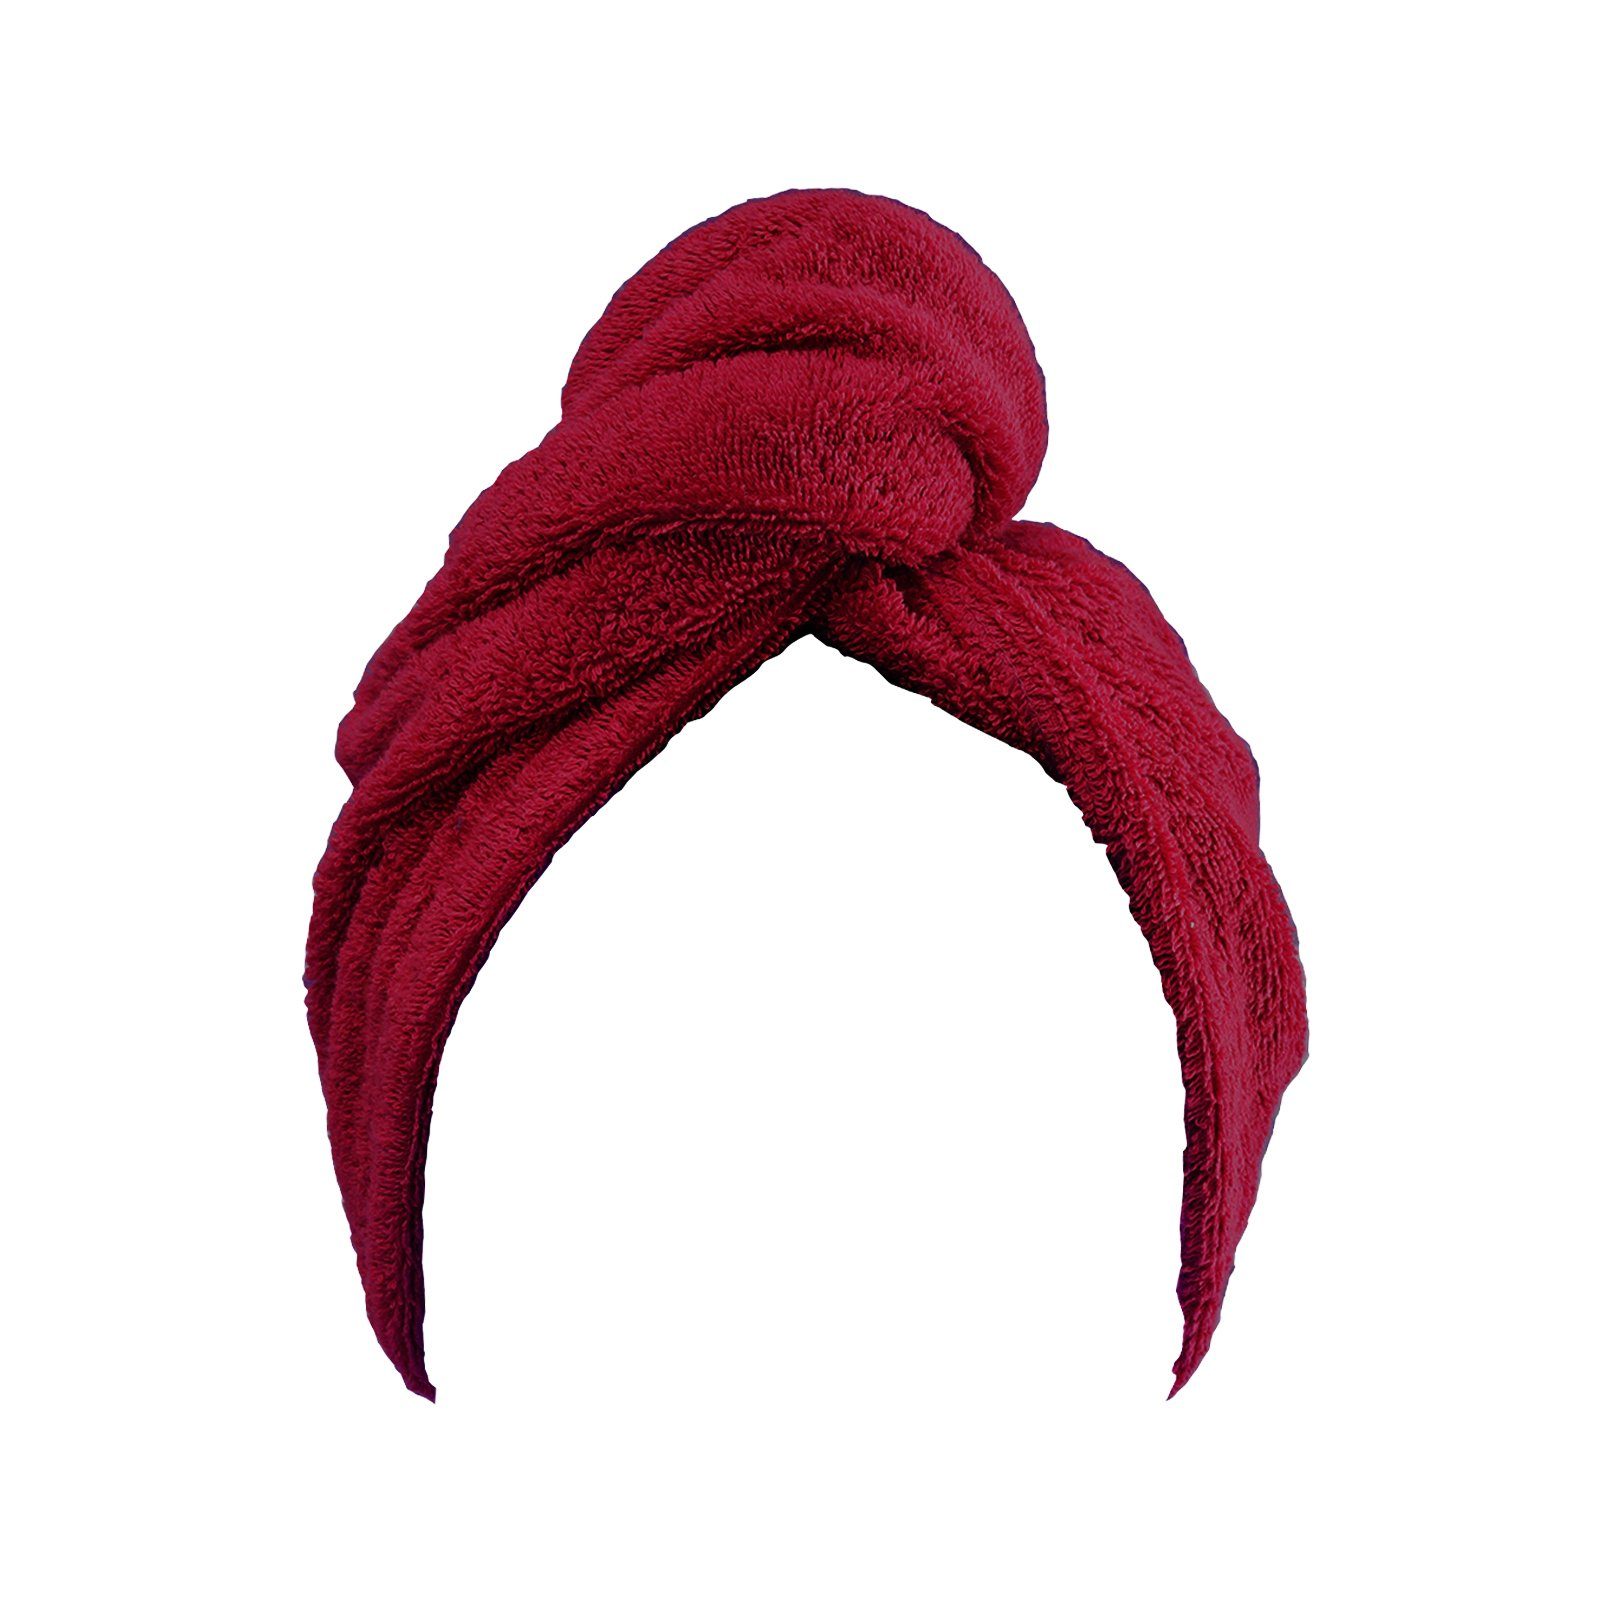 Turban-Handtuch CLASS 72x27 Haar-Turban COLLECTION Kopfhandtuch Frottee Bordeaux cm HOME Baumwolle